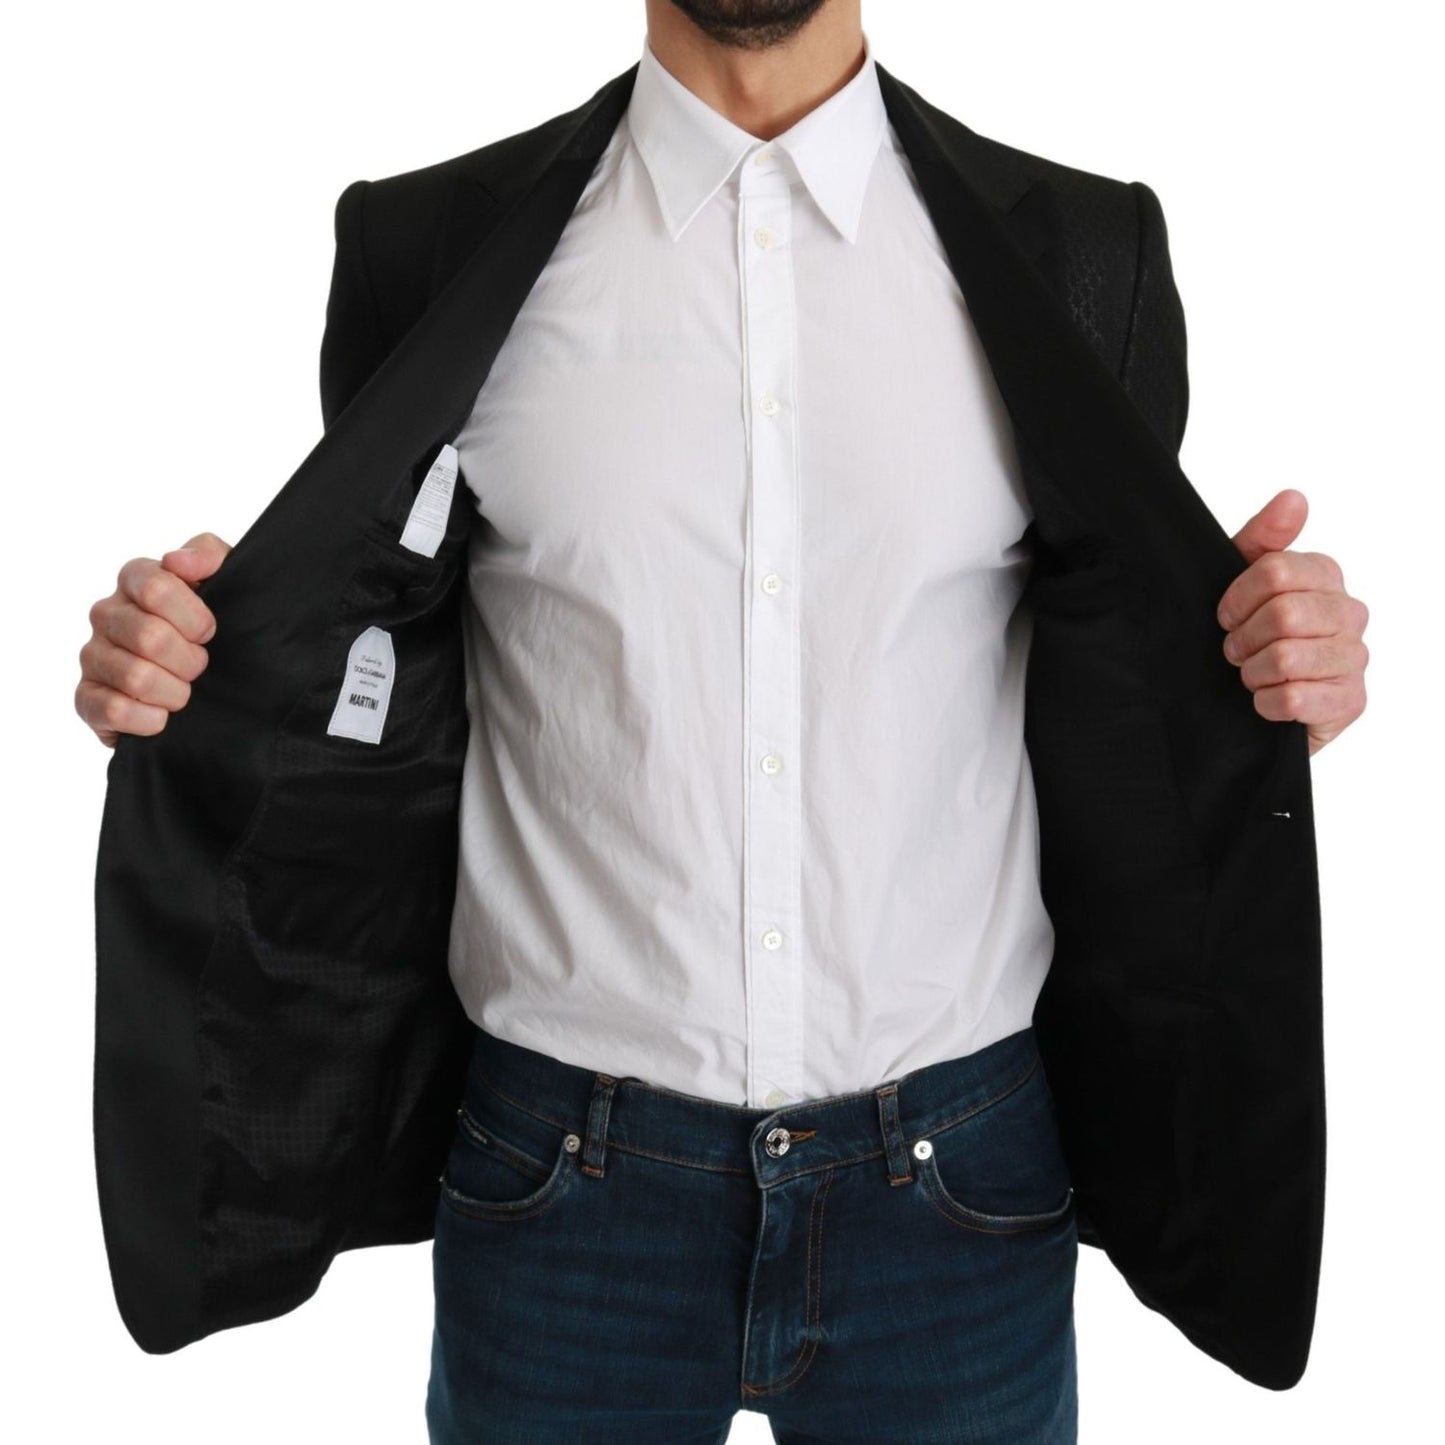 Dolce & Gabbana Slim Fit Martini Black Blazer Jacket black-slim-fit-jacket-martini-blazer Suit IMG_1018-a698a9a8-26c.jpg